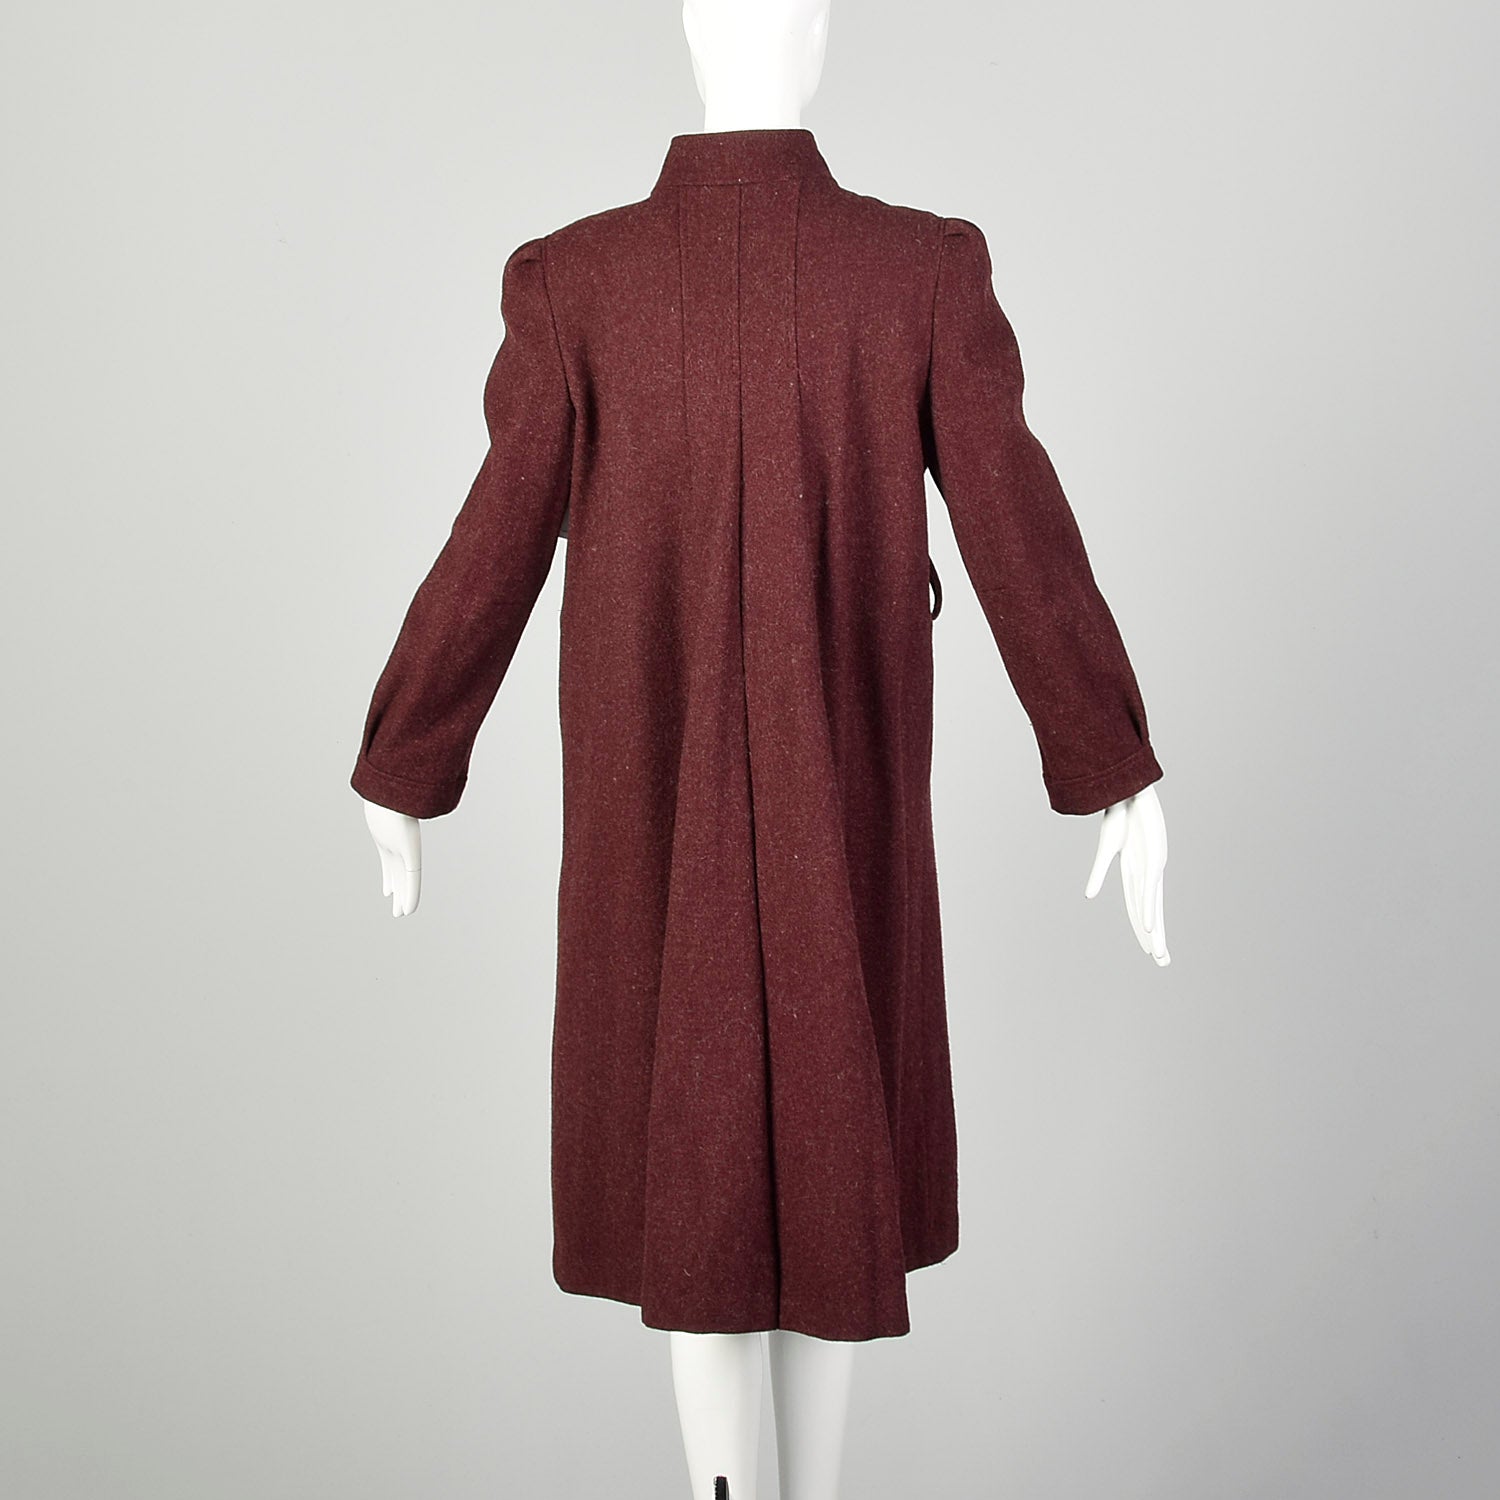 Medium 1970s Swing Coat Wool Maroon Autumn Burgundy Winter Vintage Outerwear